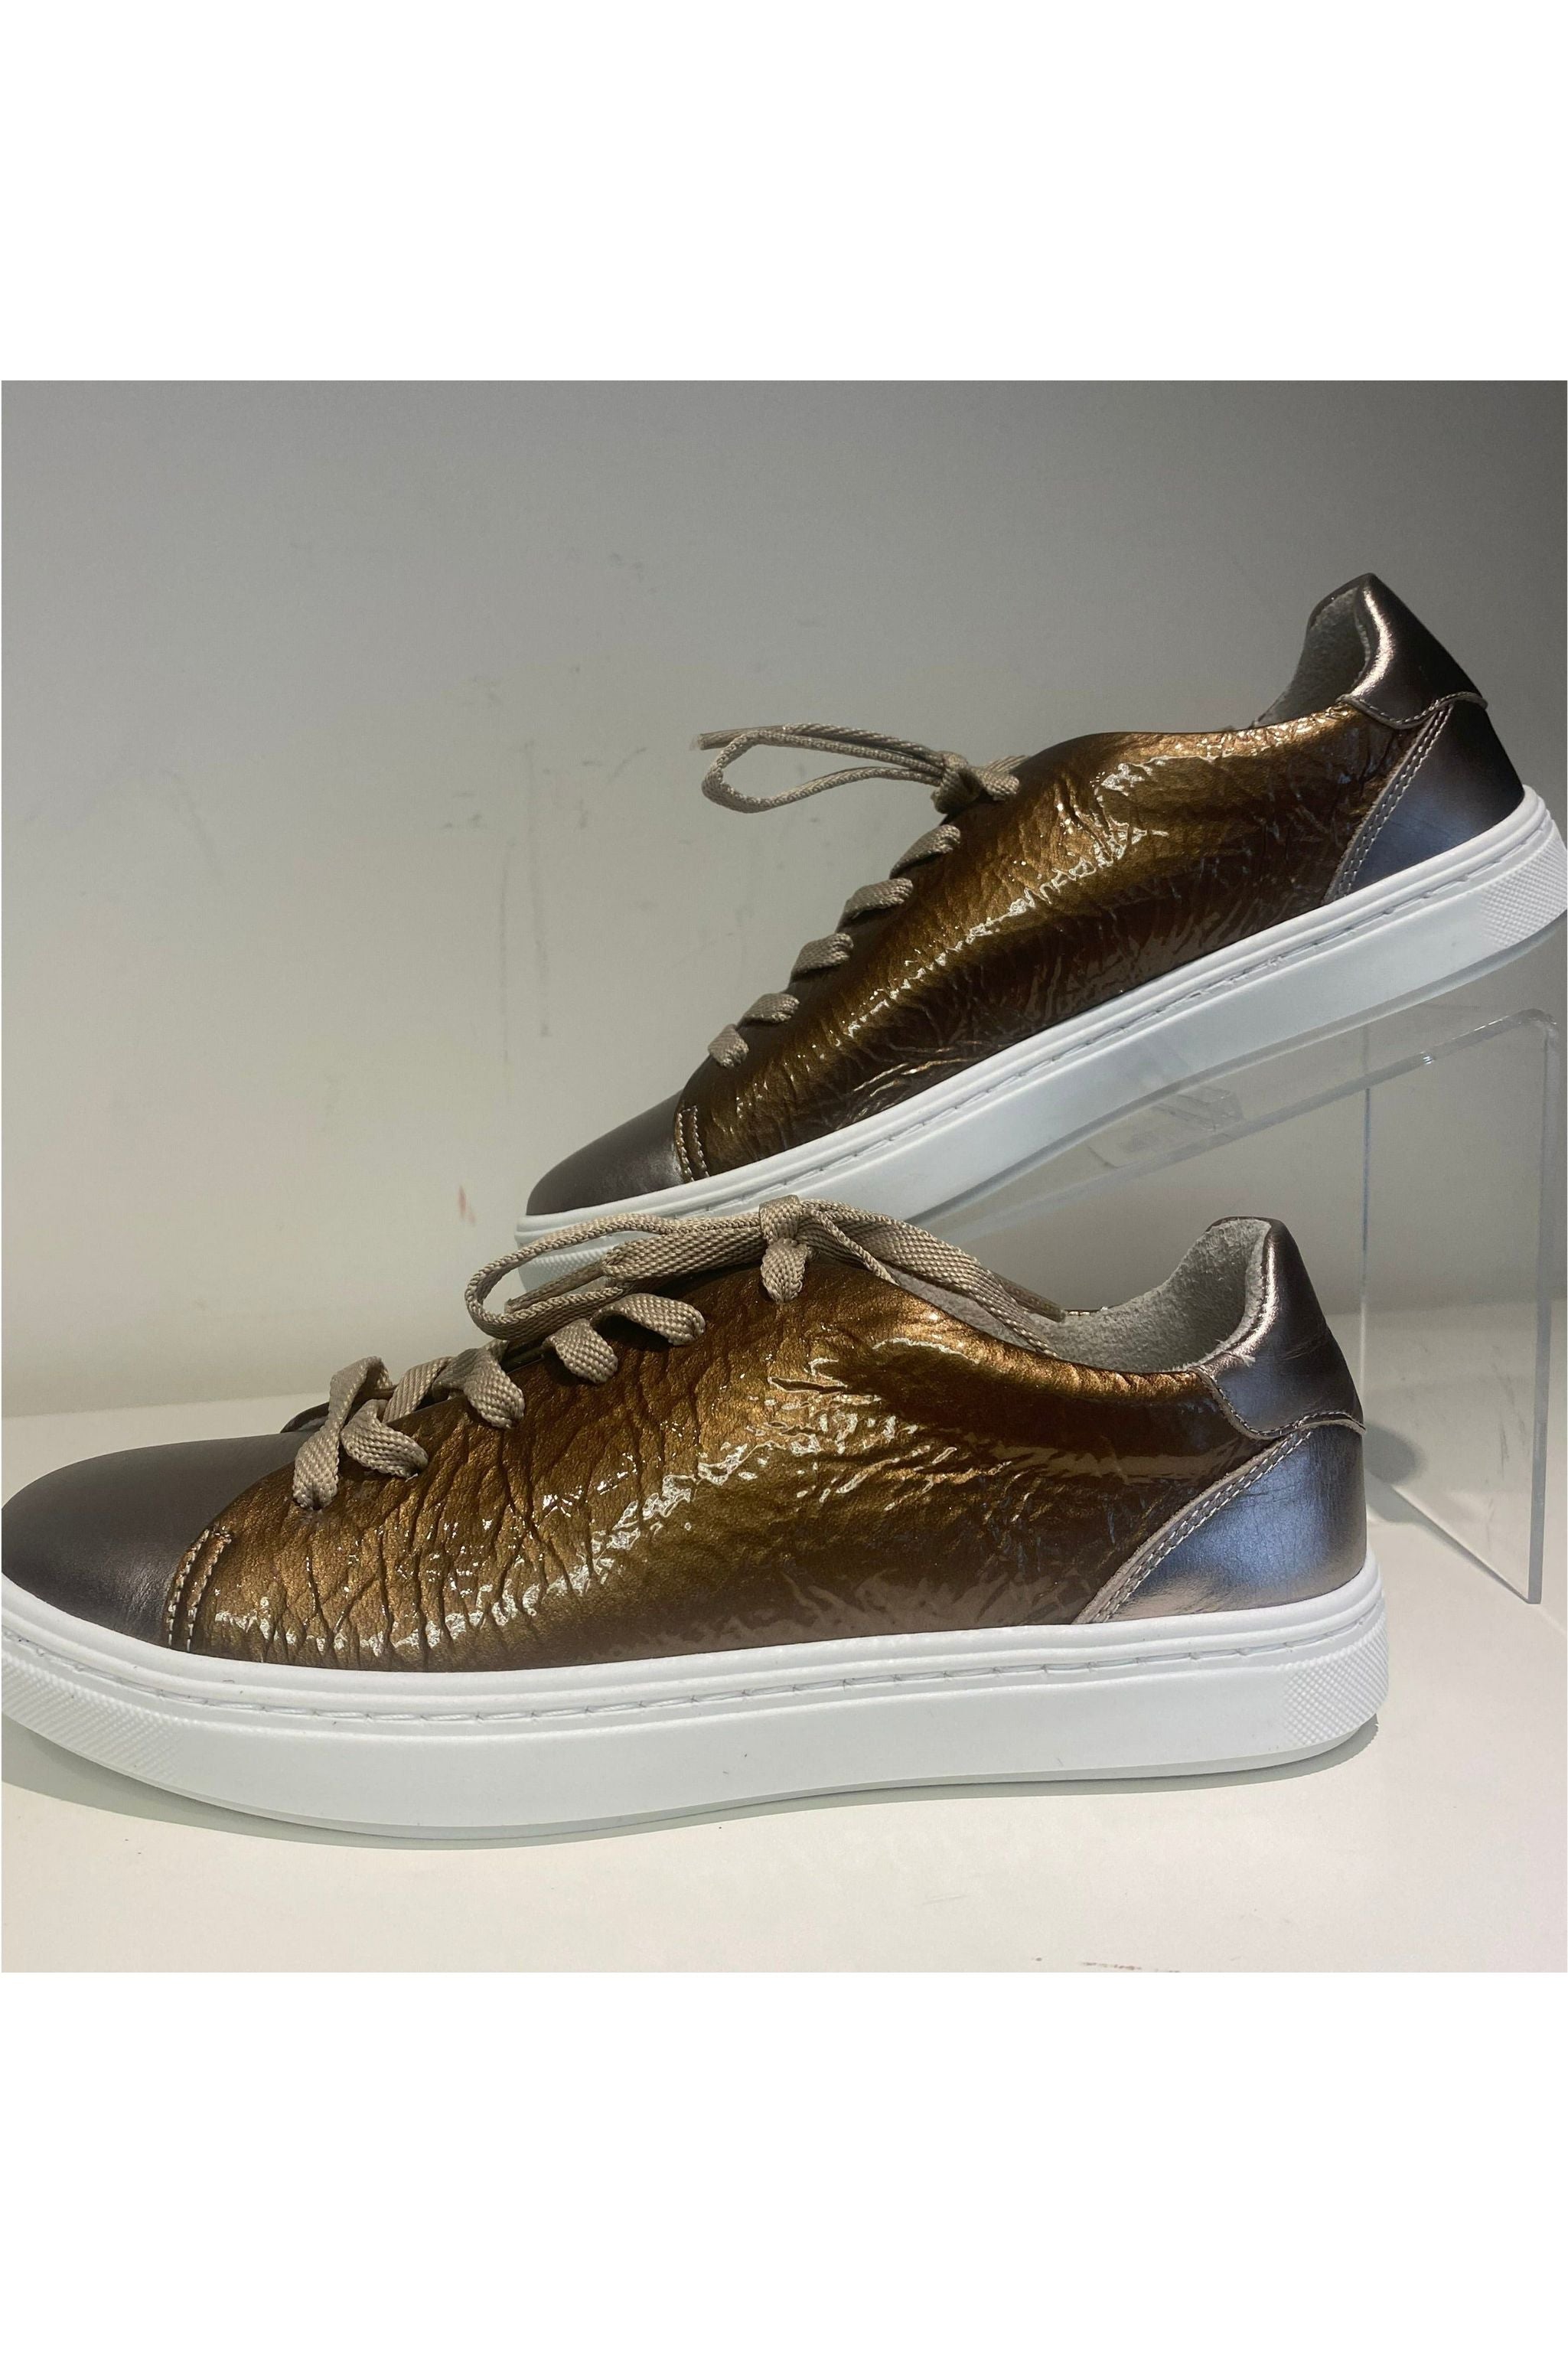 Bos & Co Fashion Sneaker - Style Cherise, pair2